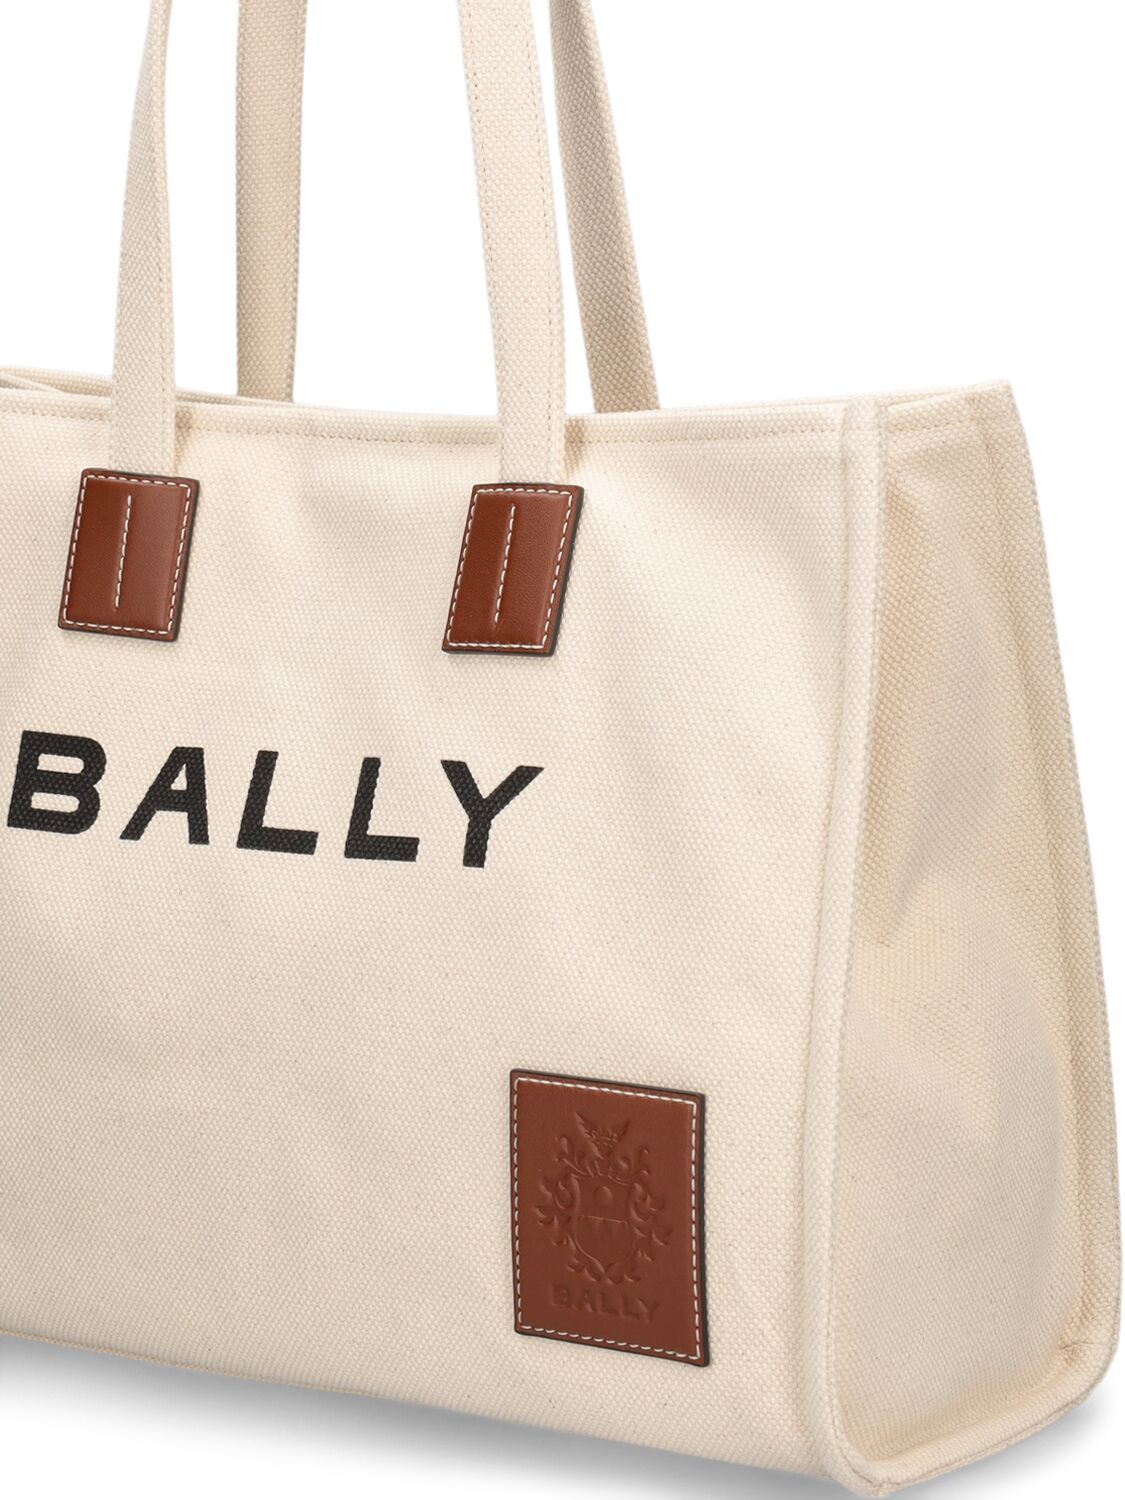 Bally leather bag with printed logo